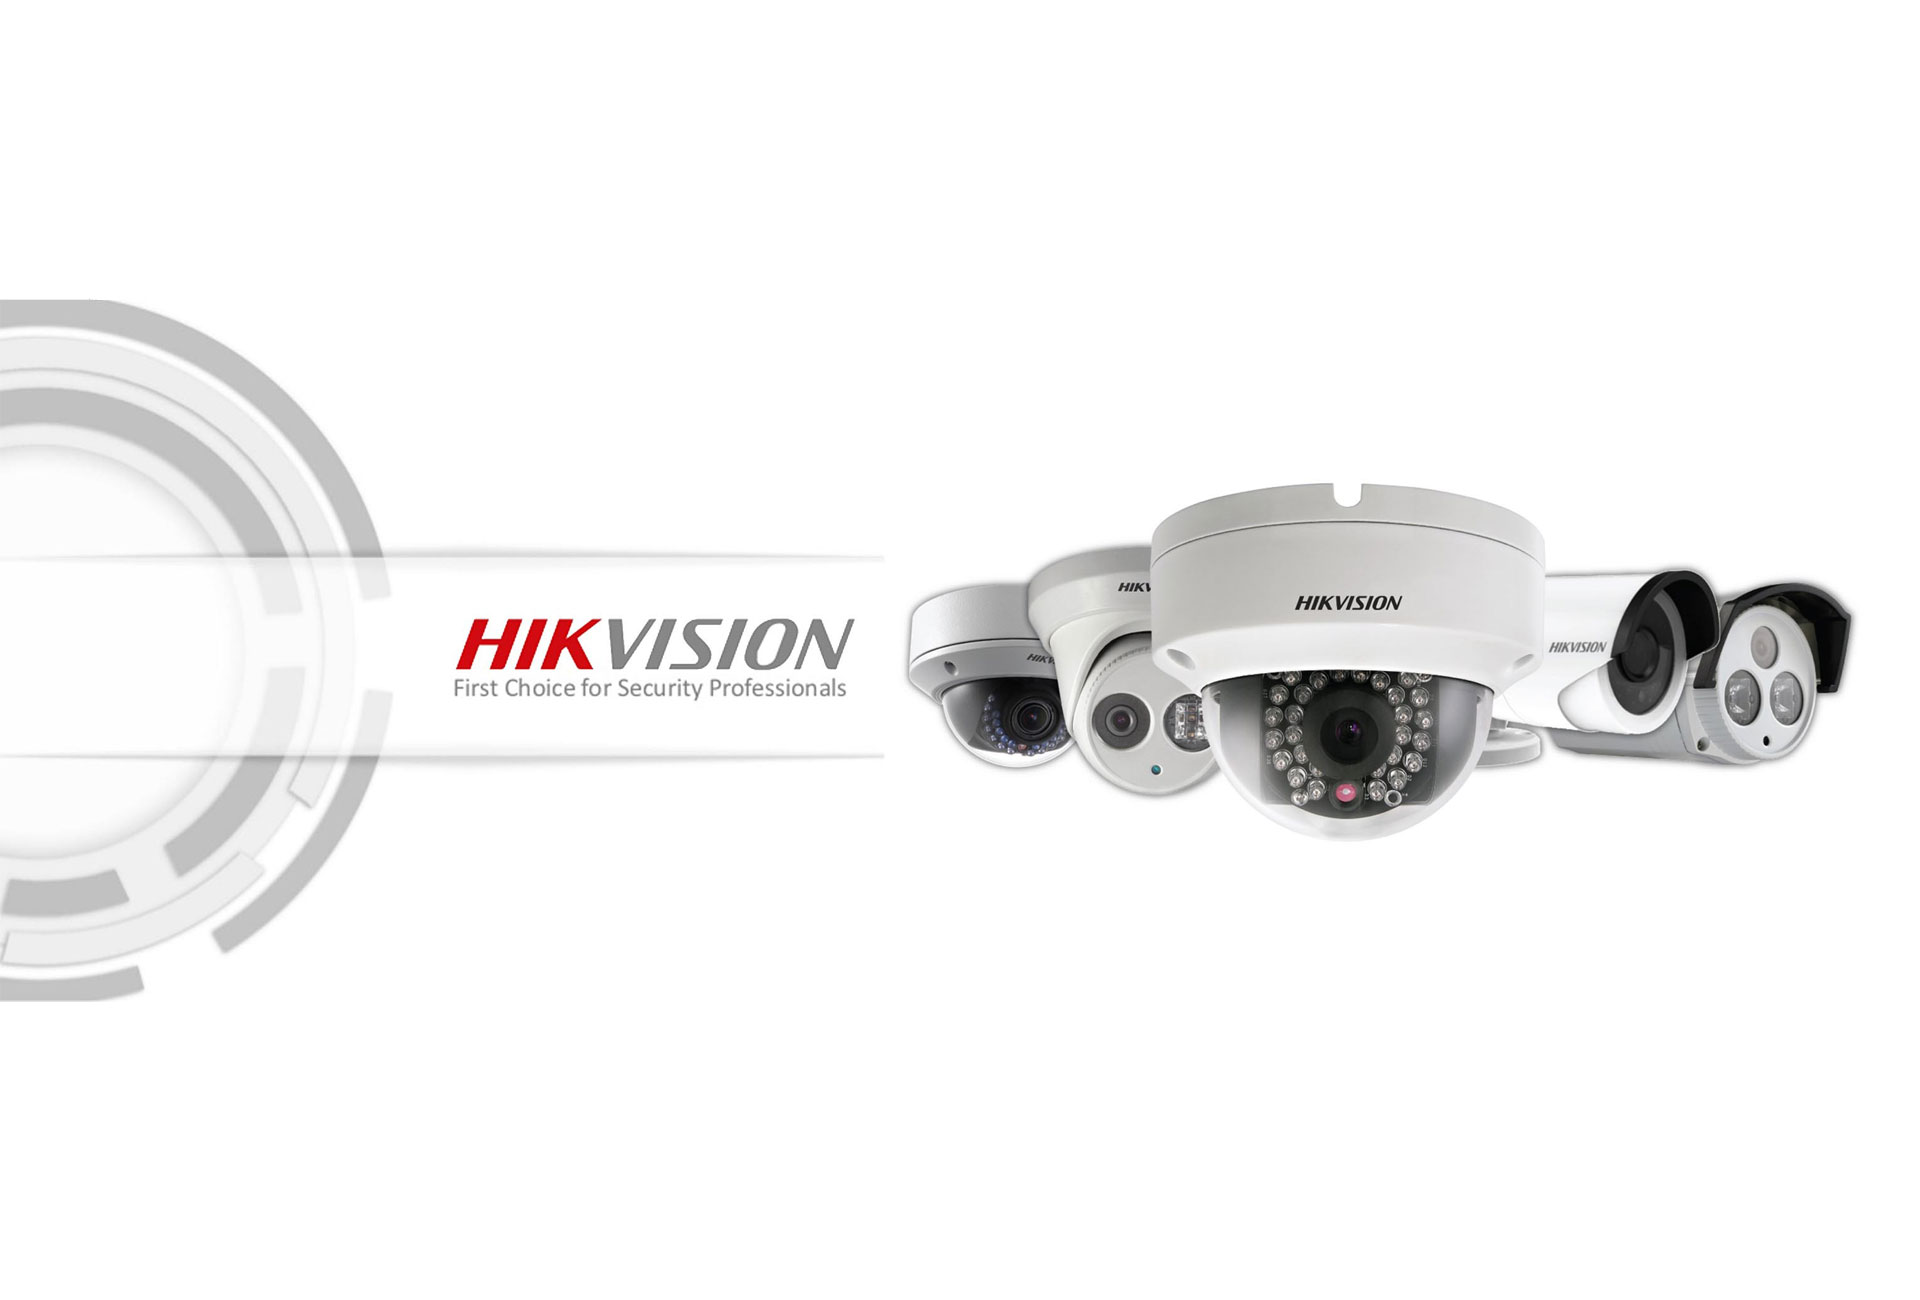 hikvision ip camera dealers in delhi and gurgaon